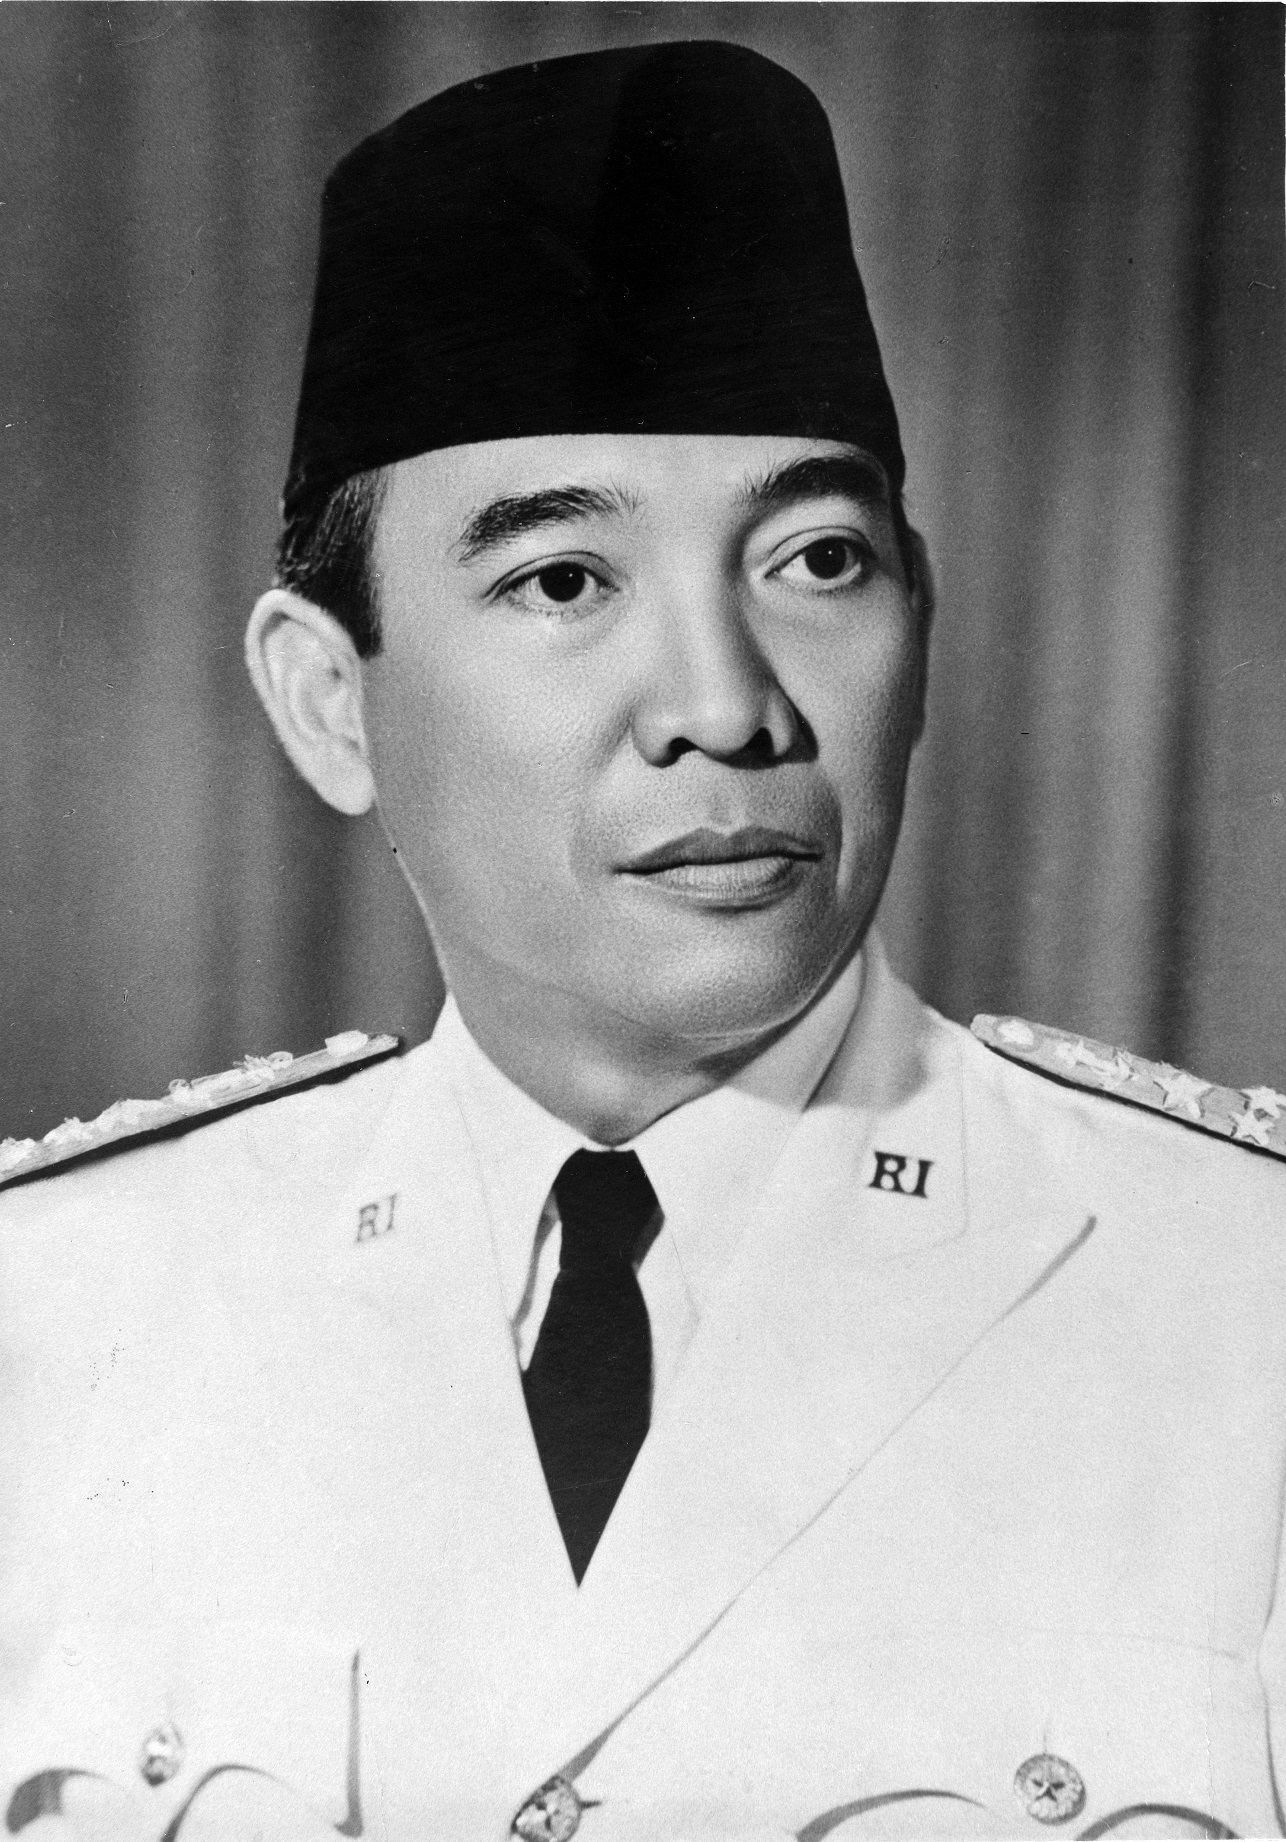 Nama Presiden Indonesia